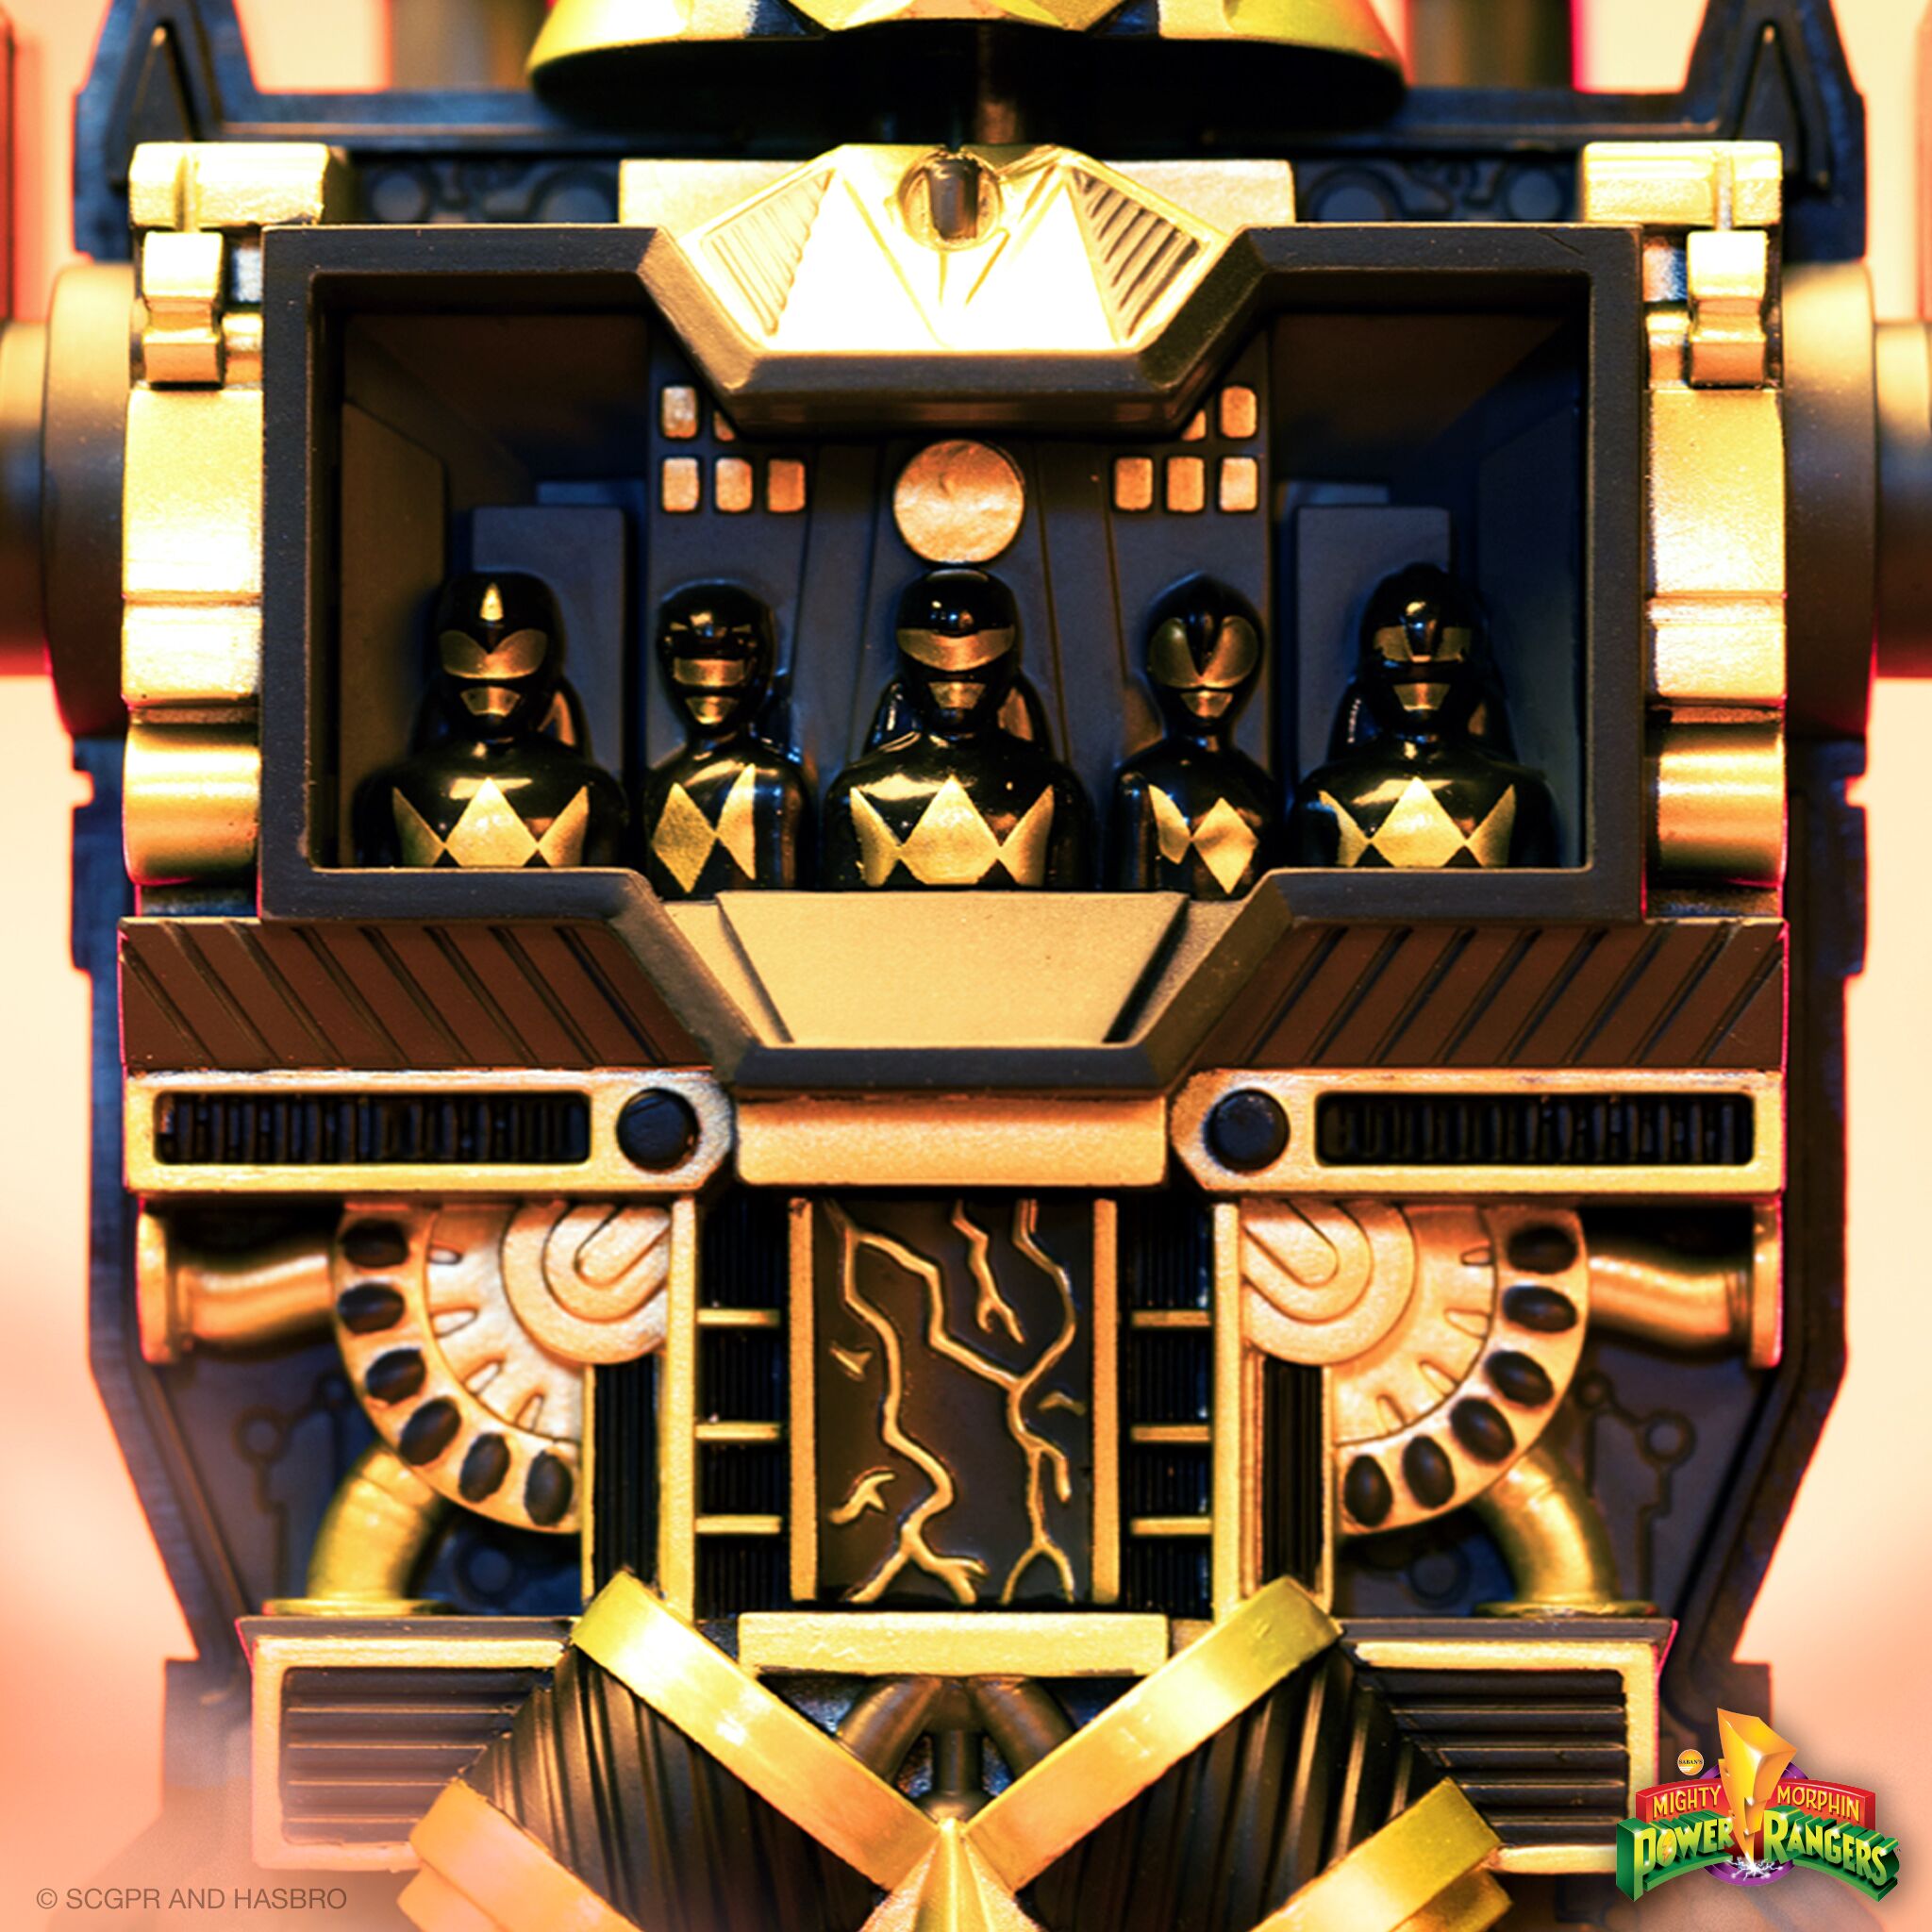 Mighty Morphin Power Rangers Super Cyborg - Megazord (Black / Gold)